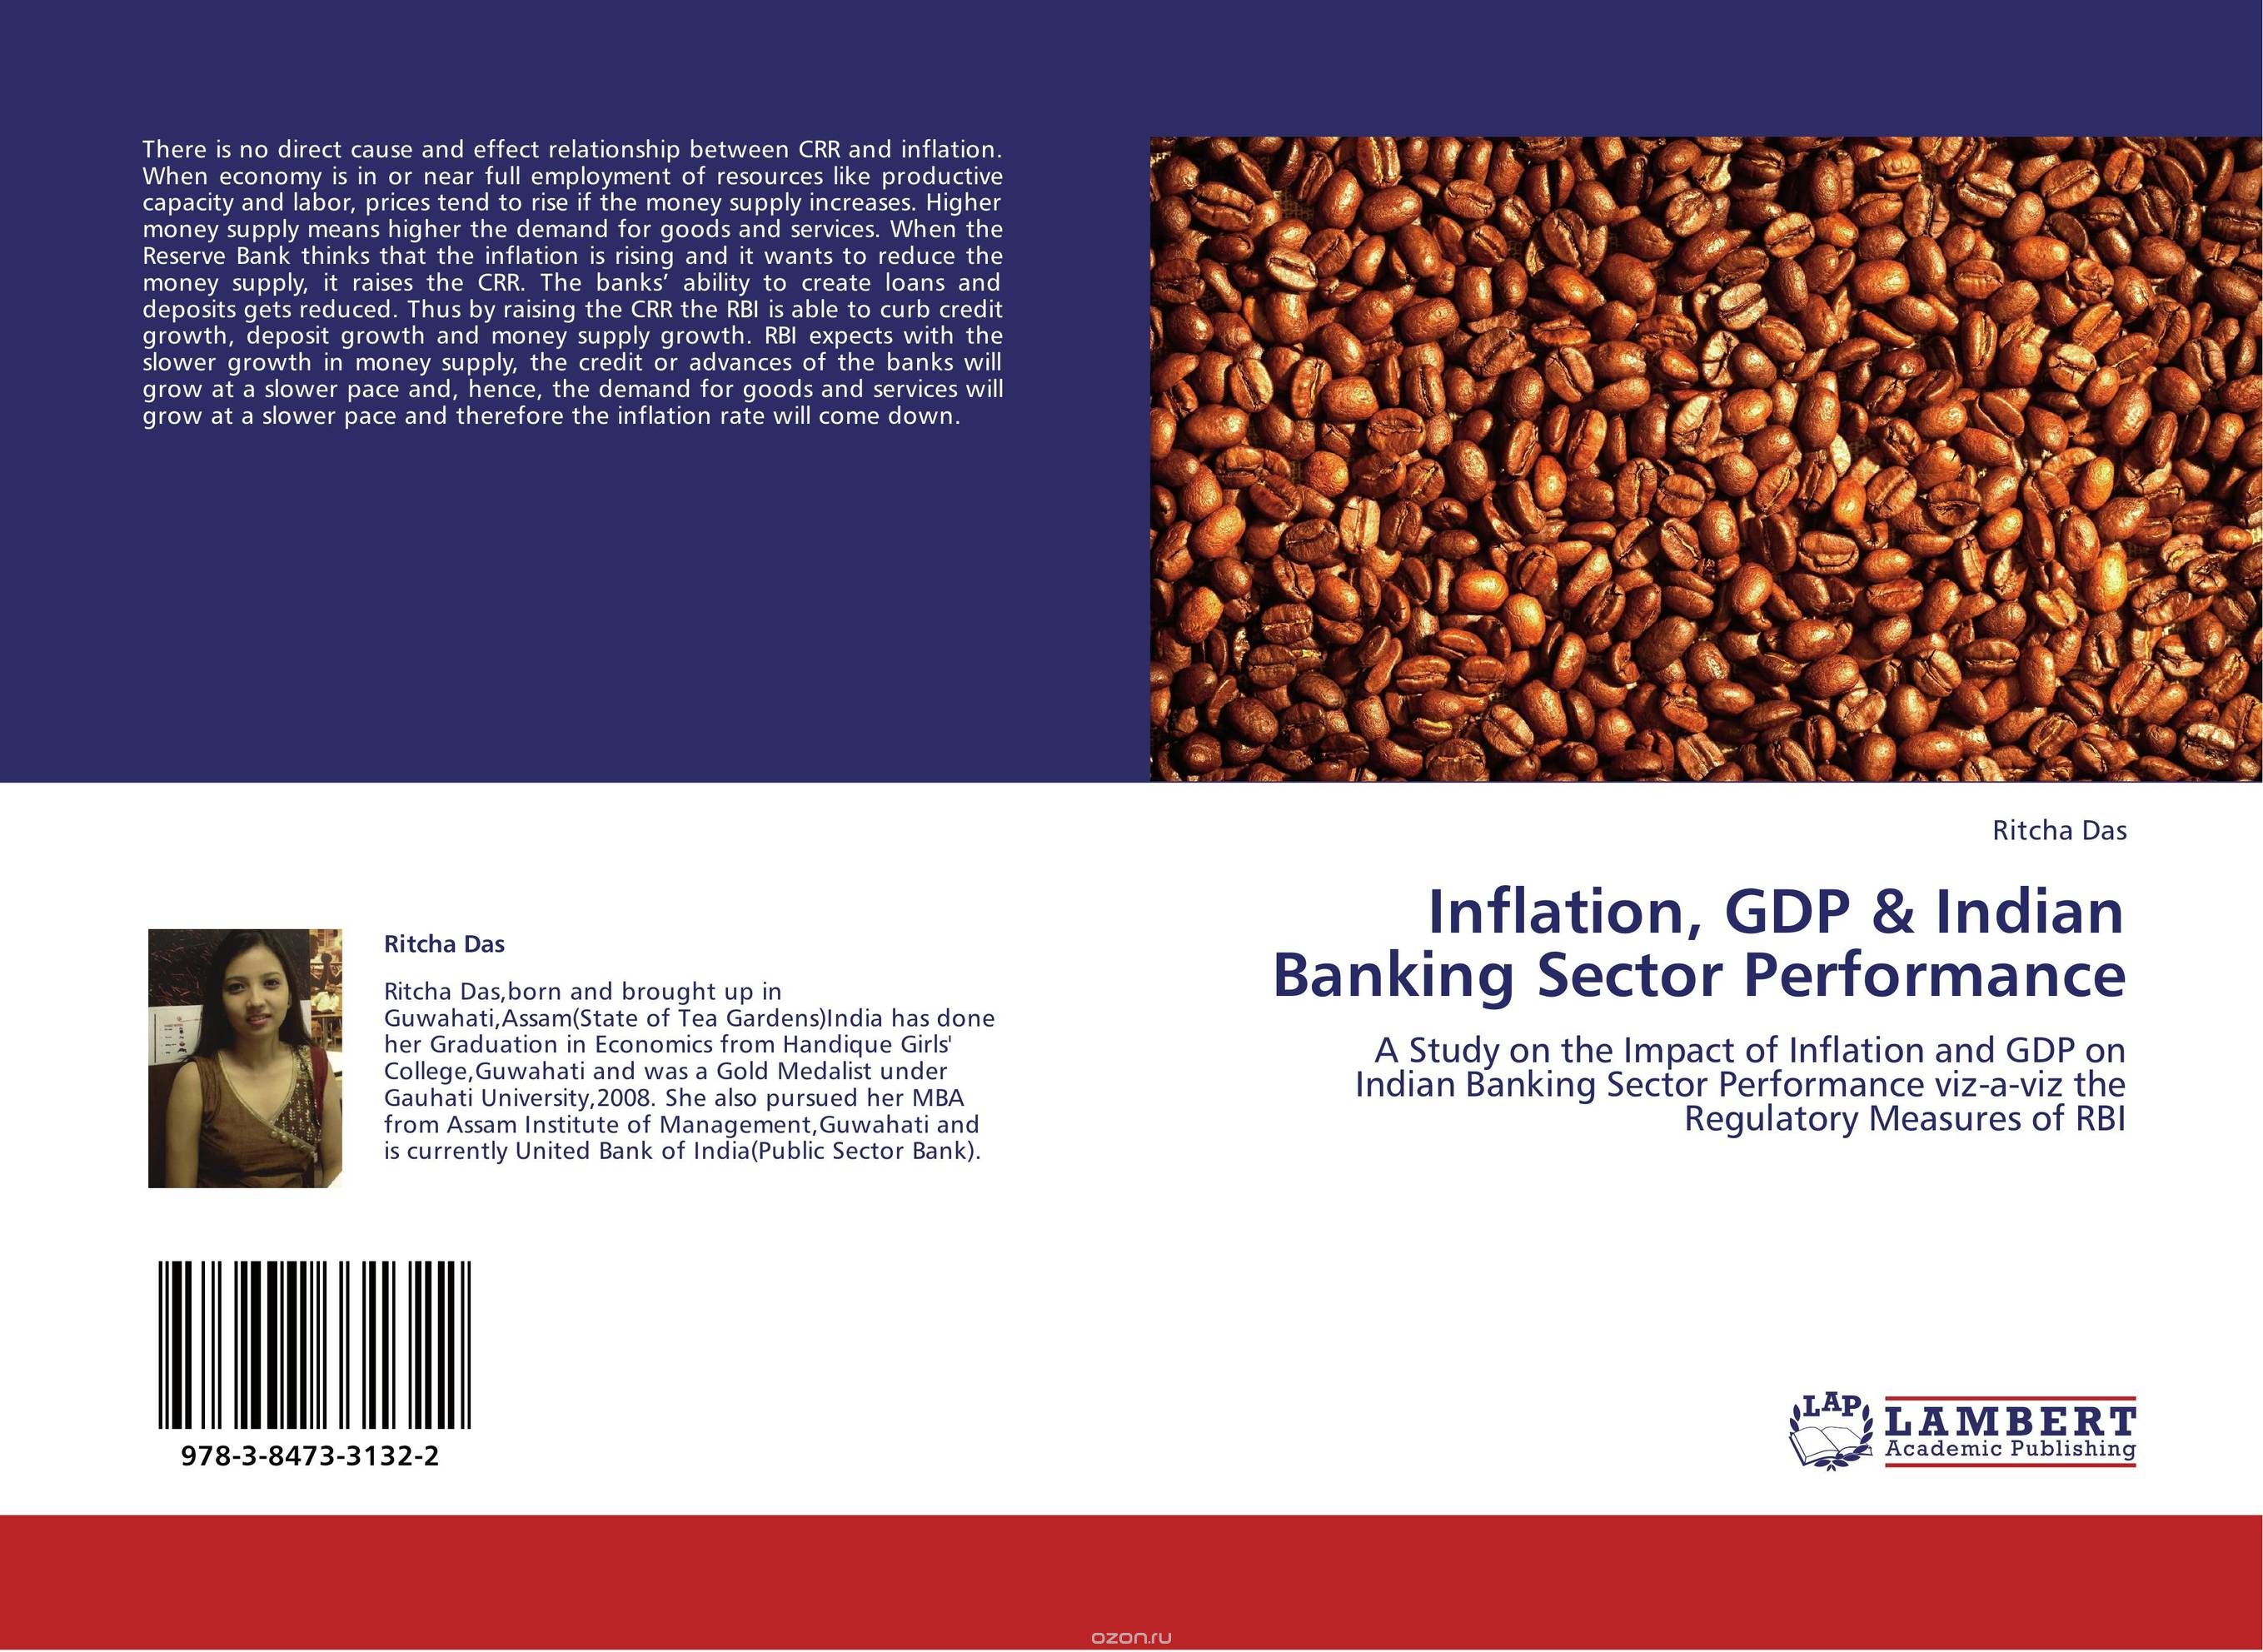 Скачать книгу "Inflation, GDP & Indian Banking Sector Performance"